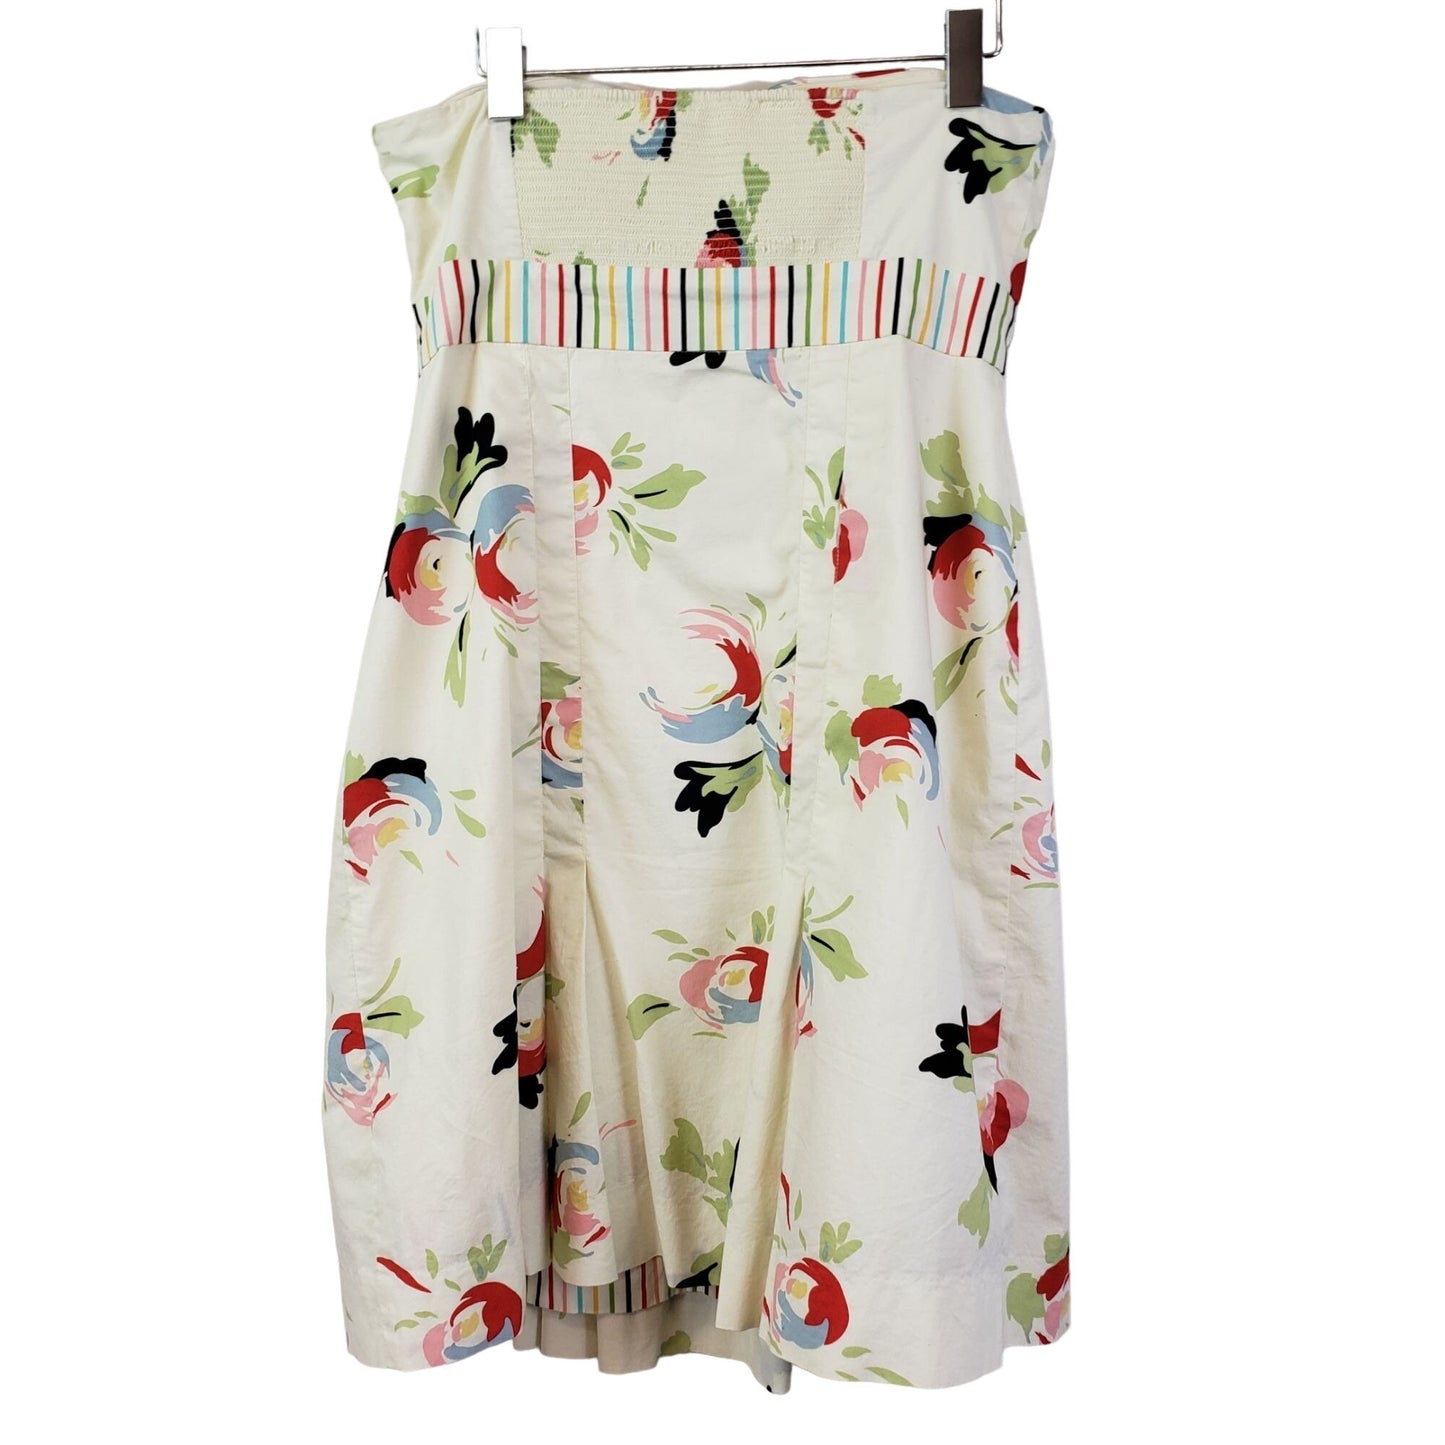 Anthropologie Maeve Floral Strapless Mini Summer Dress Size 10